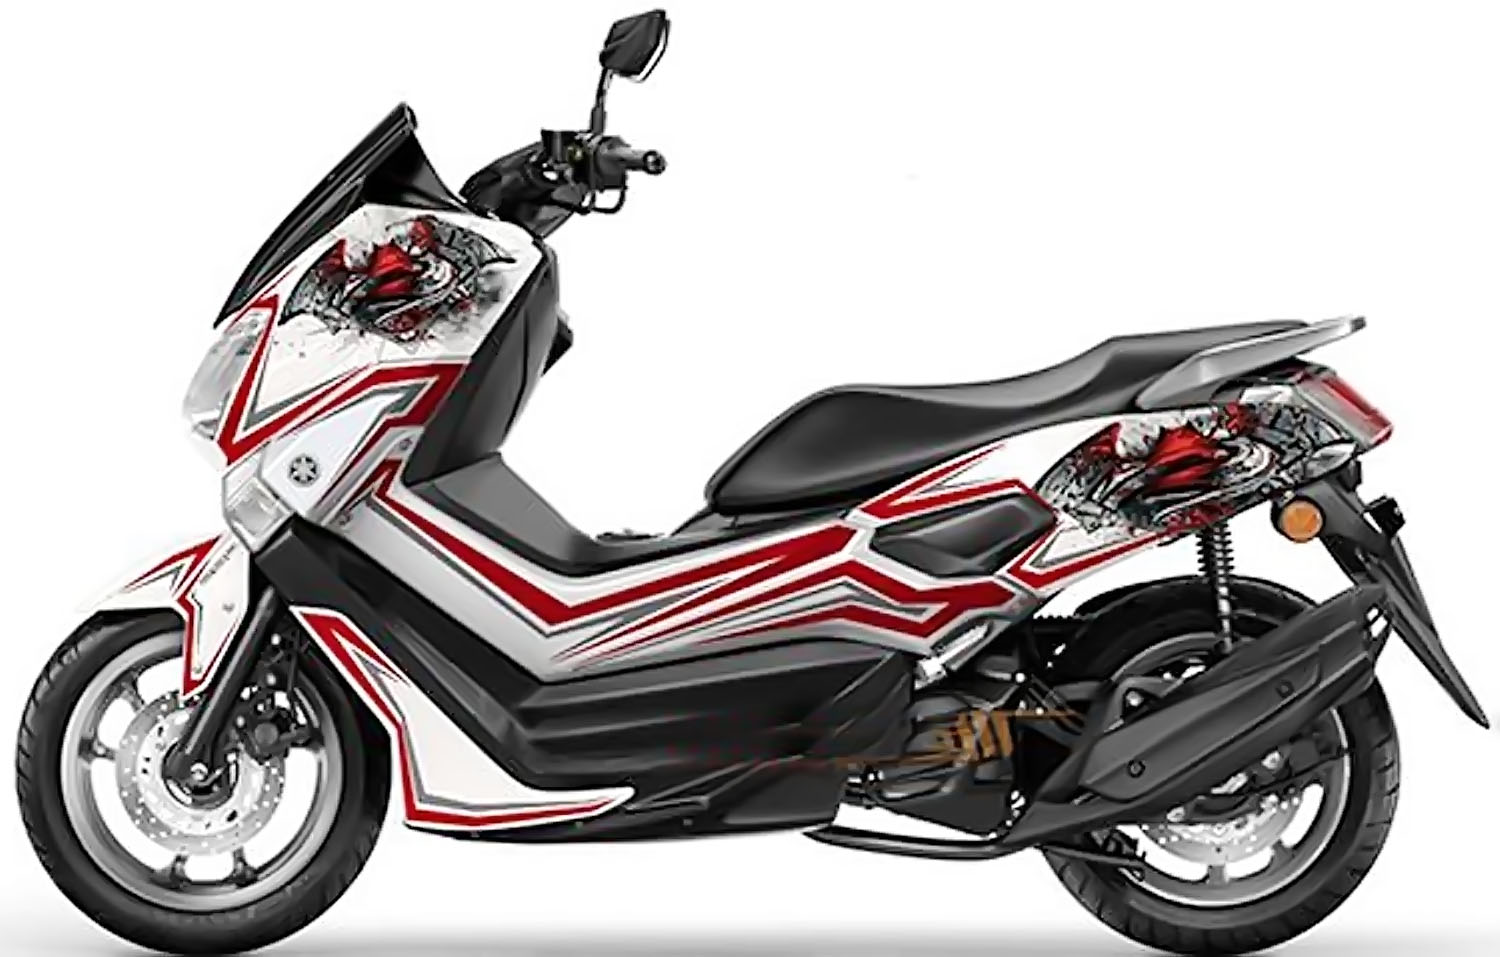  Harga Spesifikasi dan Modifikasi New Yamaha Nmax 155cc 